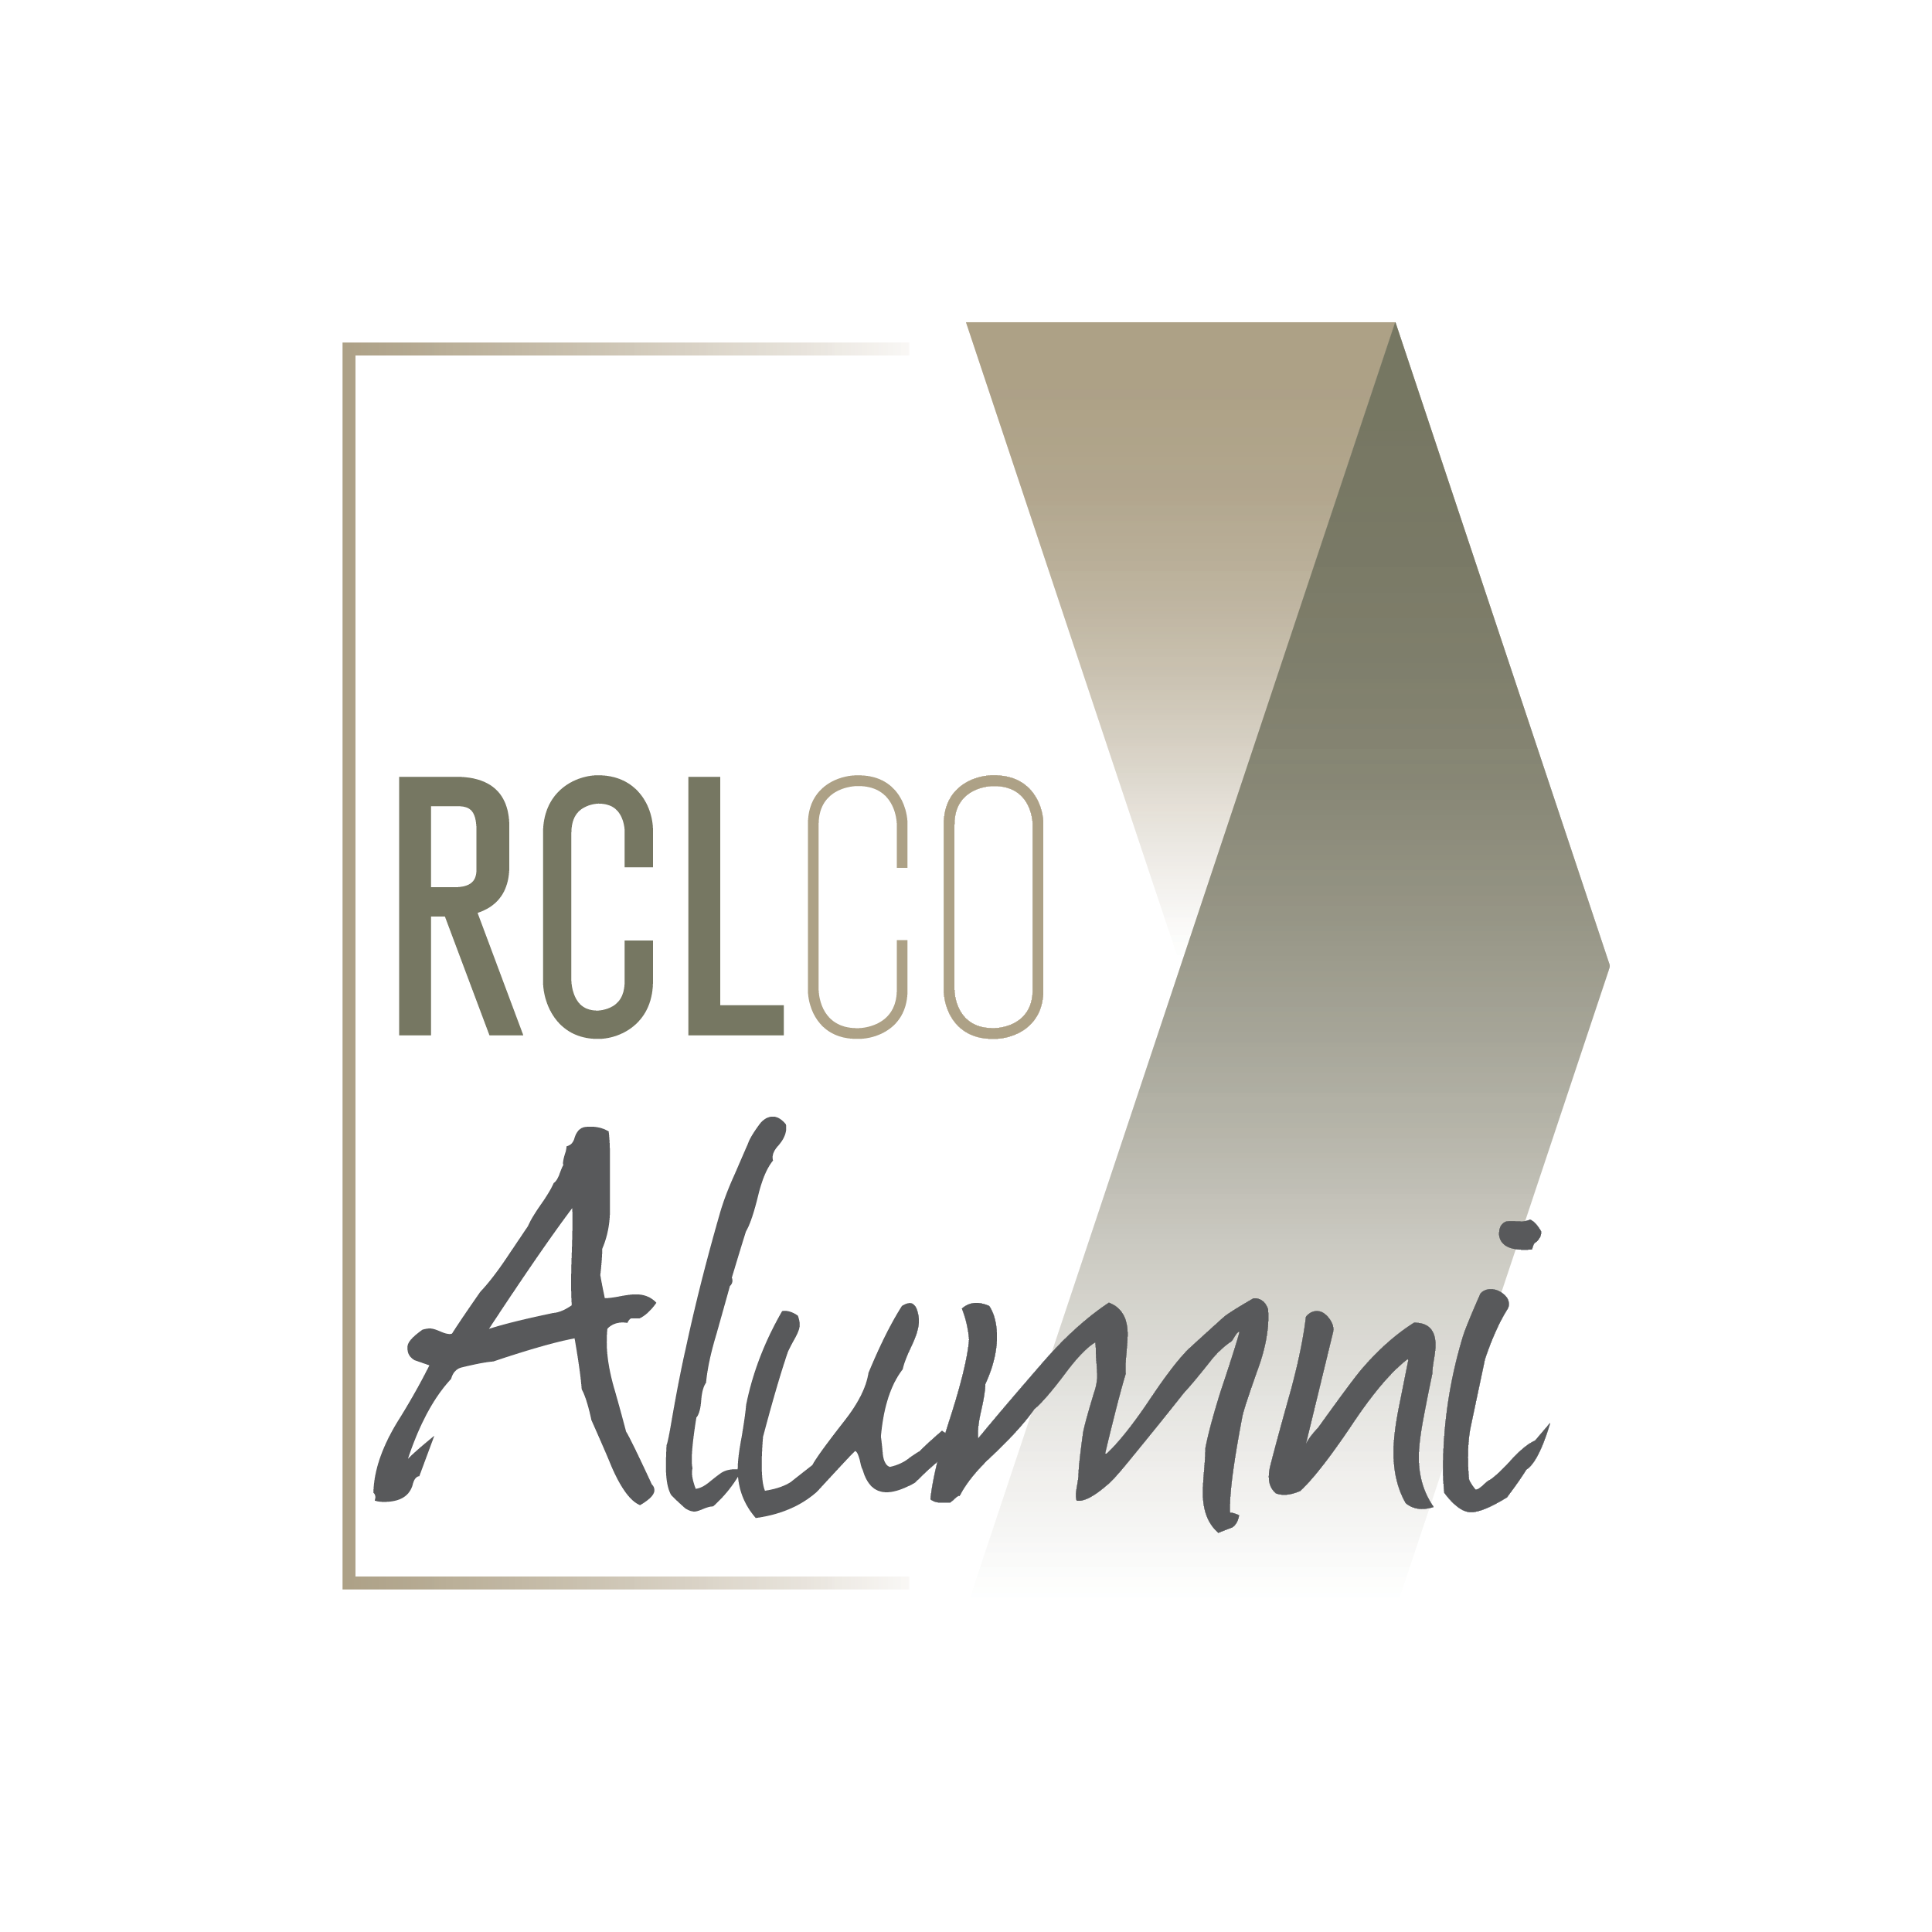 Career Page Alumni Network Logo